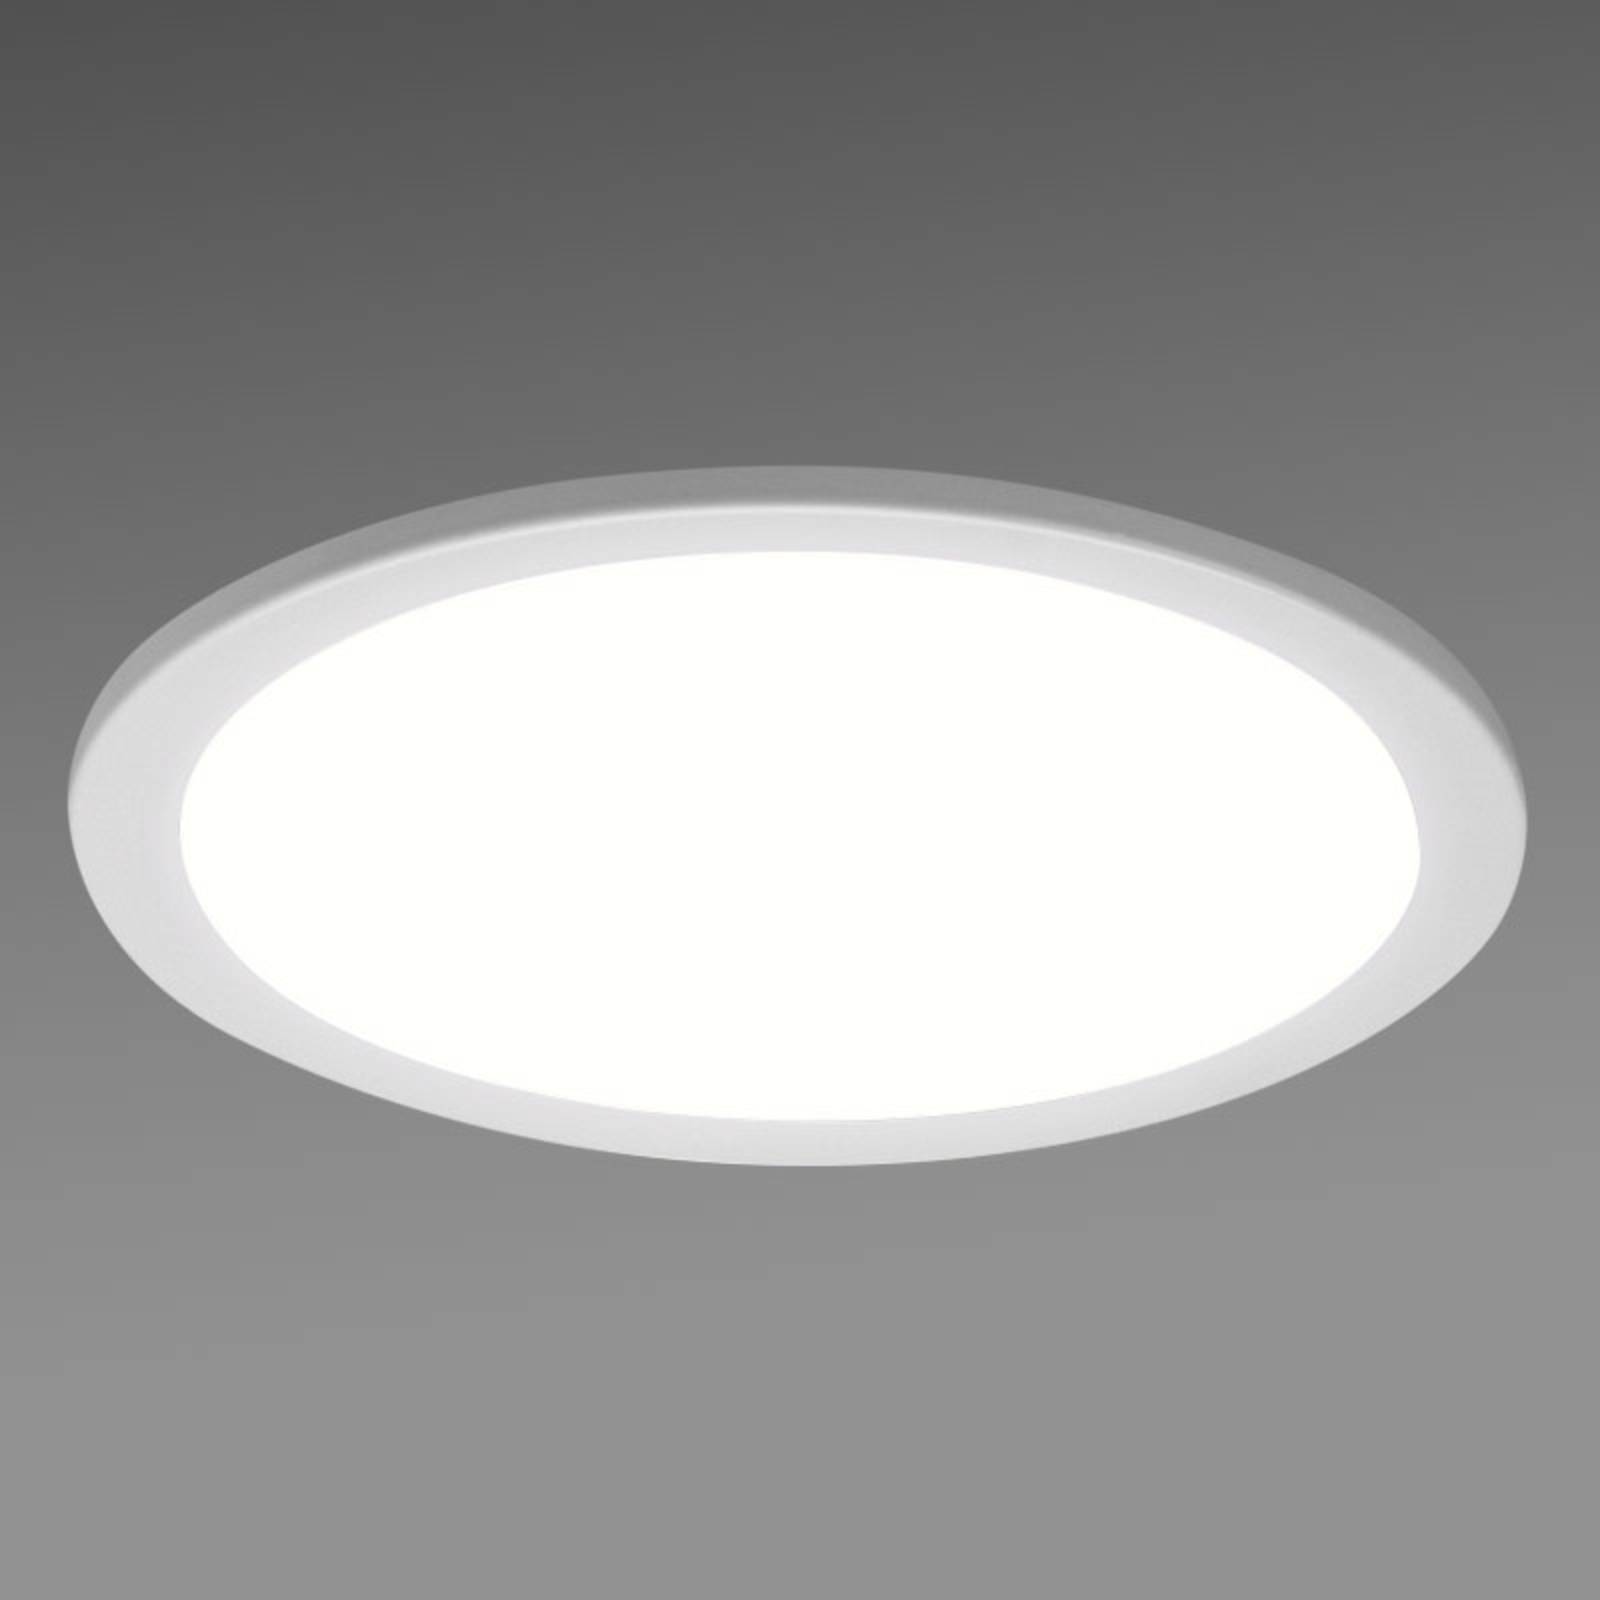 Image of Downlight encastrable LED SBLG rond, 3 000 K 